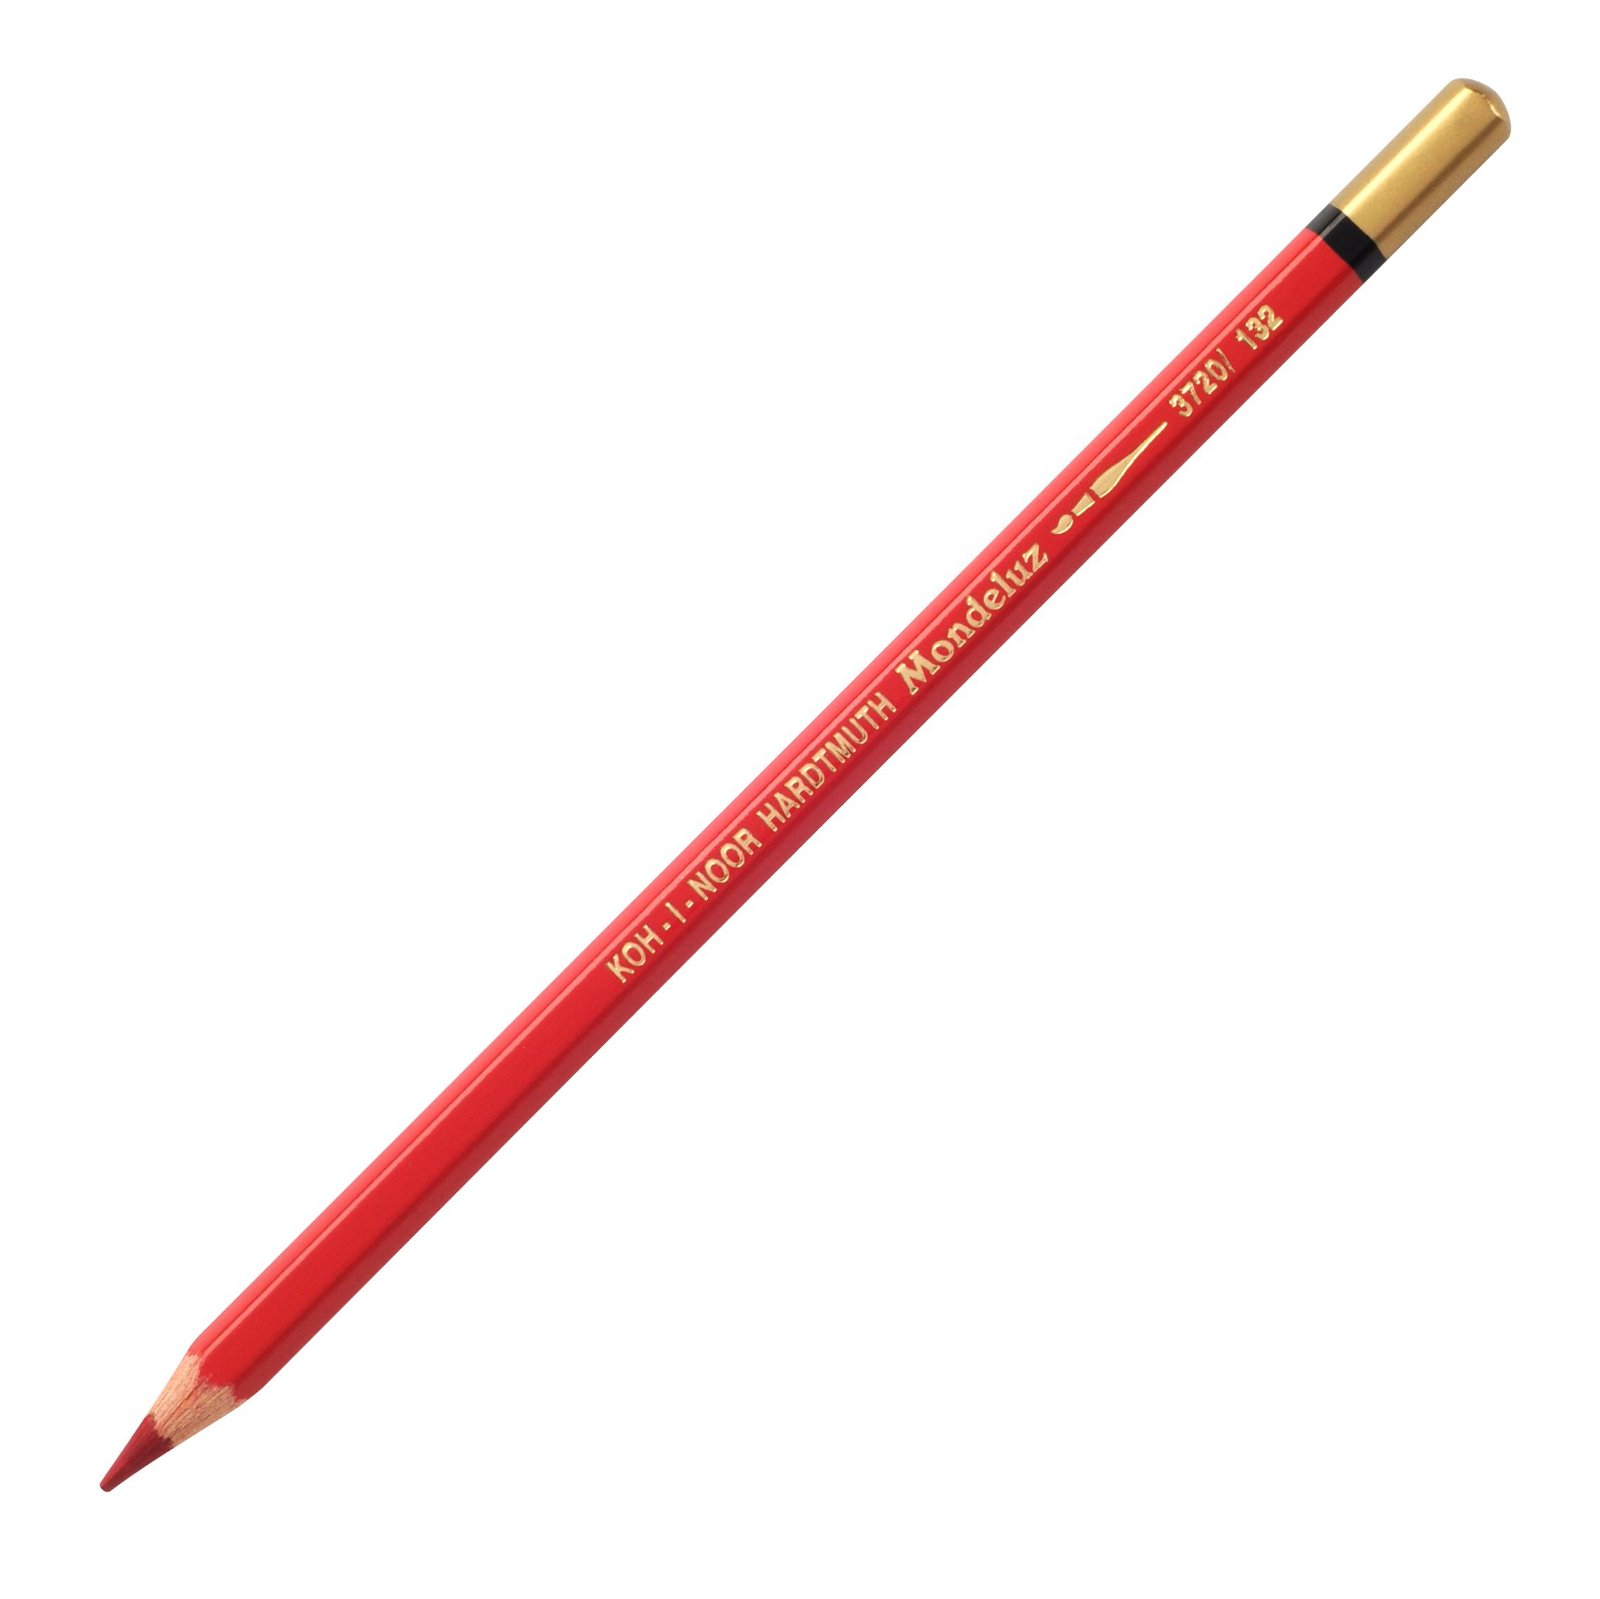 Koh-I-Noor Mondeluz Aquarell Artist's Water Soluble Coloured Pencil - Carmine Red (132)